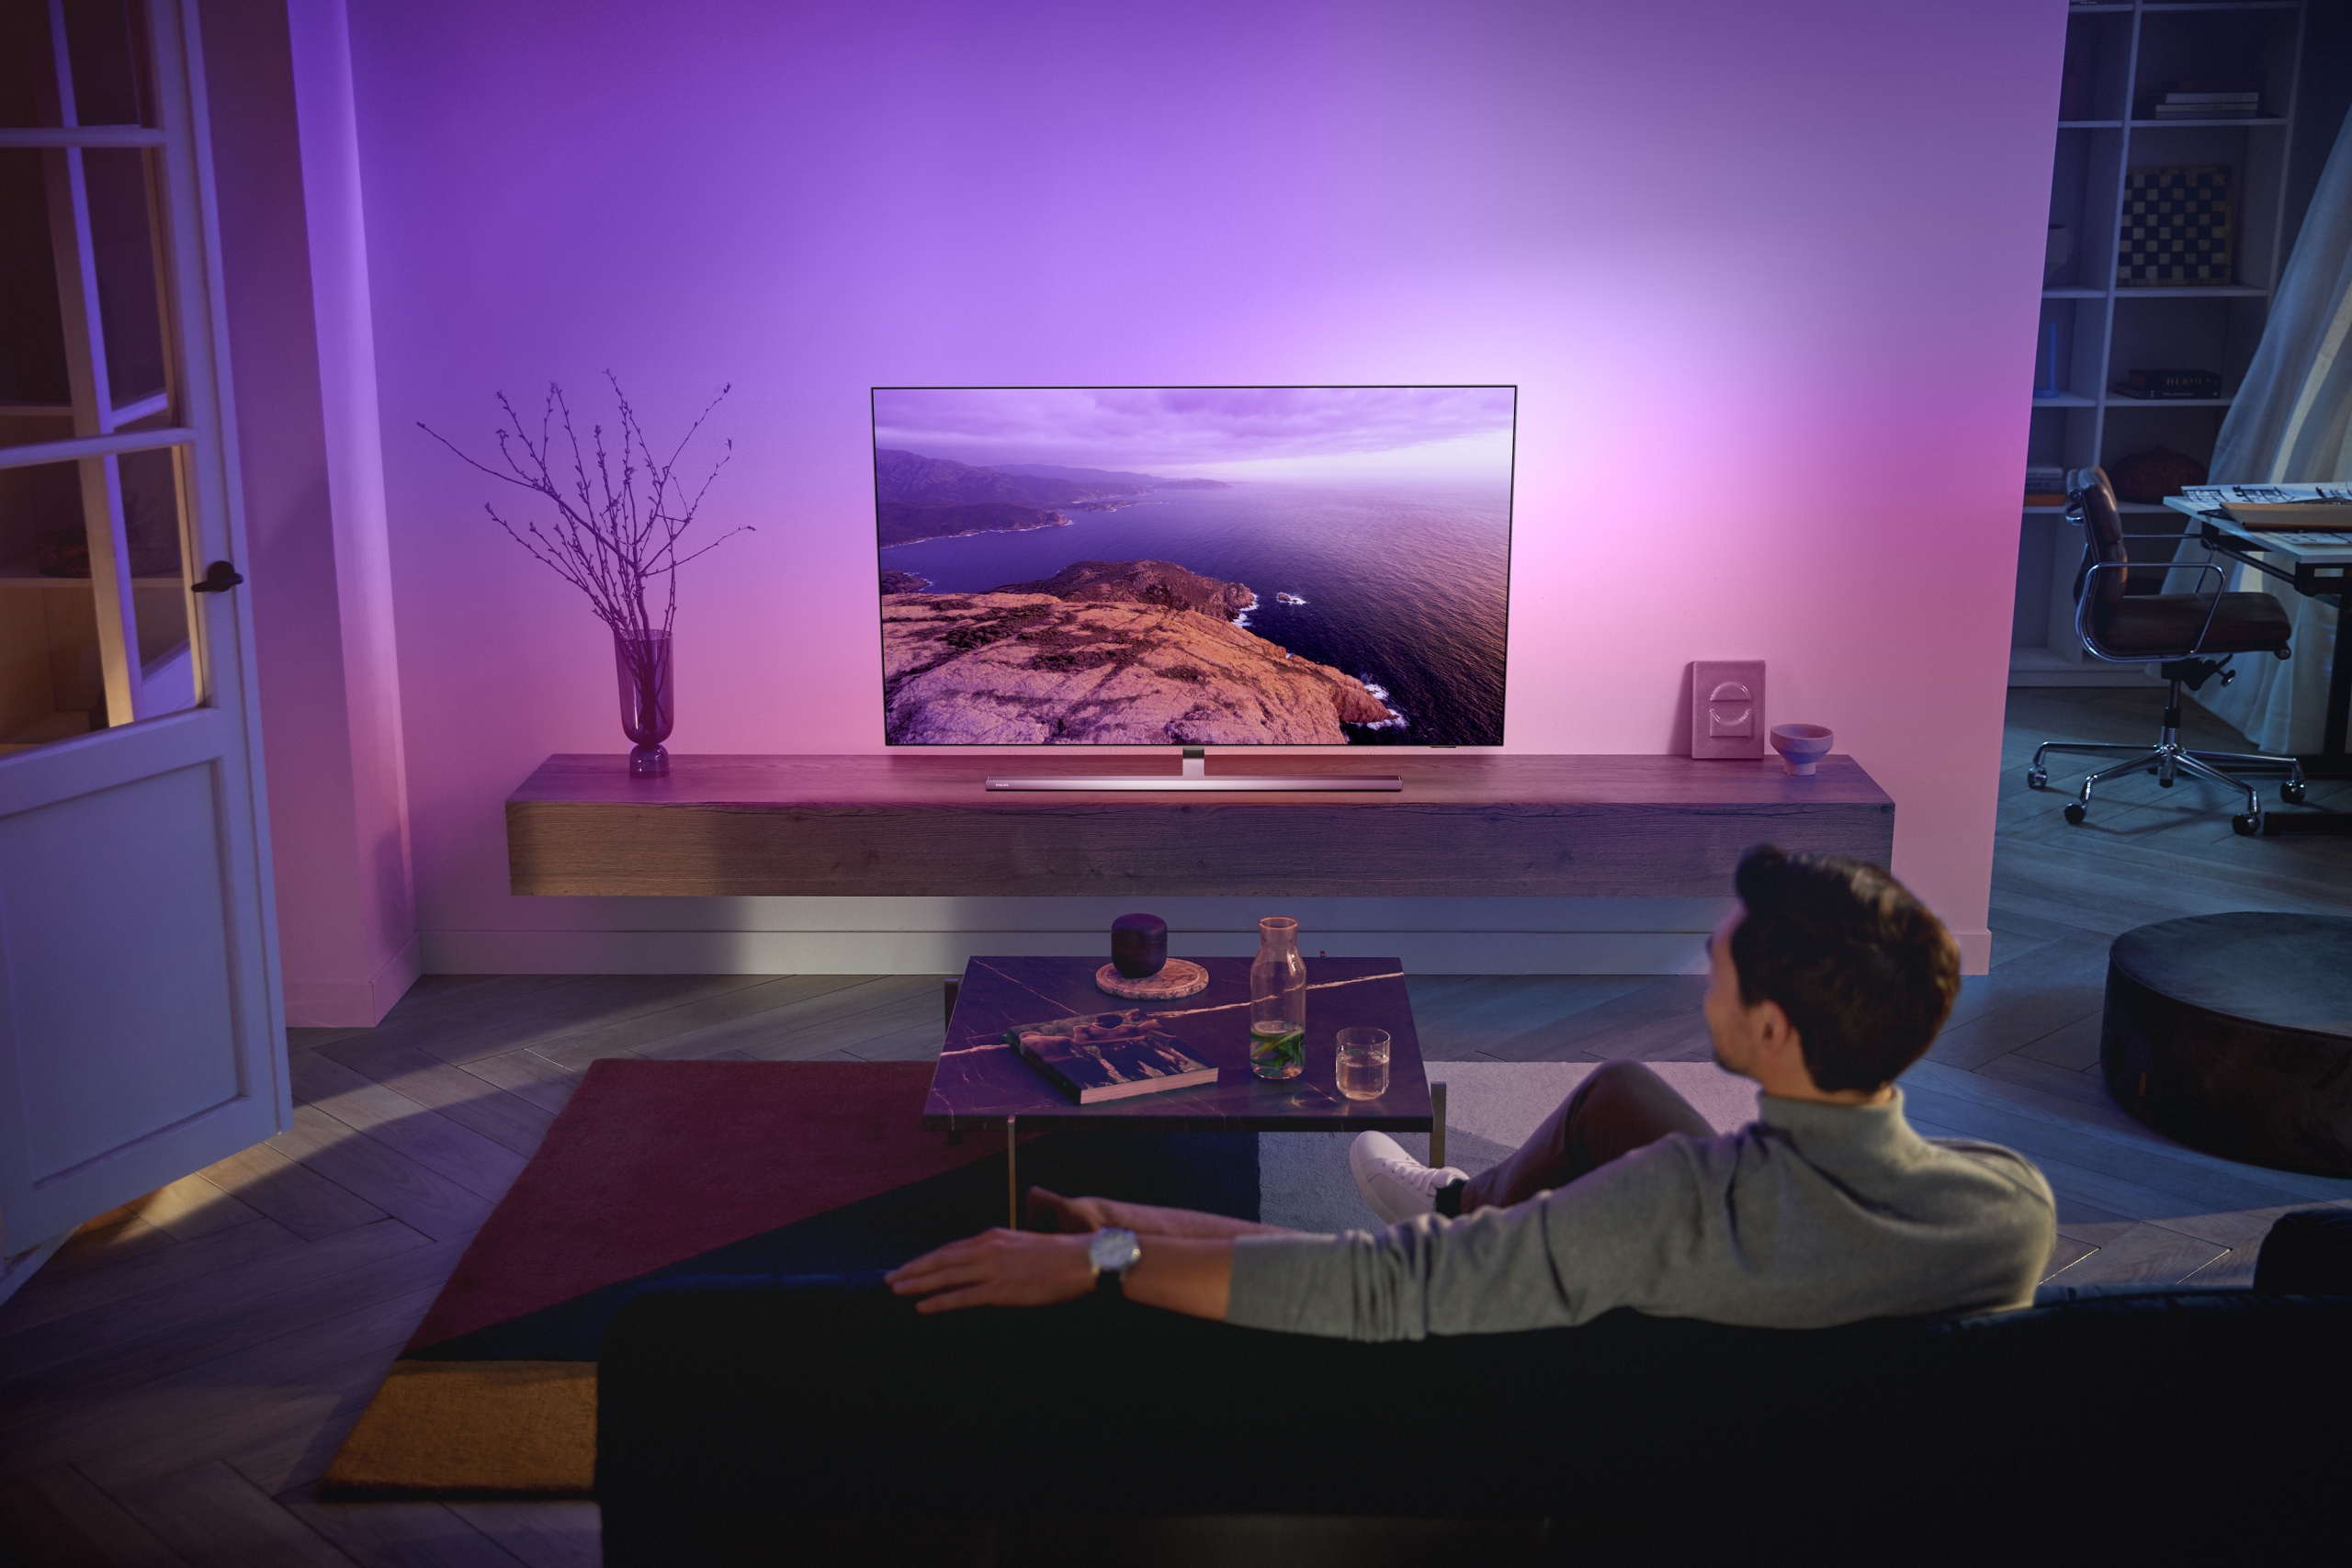 dik mini Factuur First “OLED EX” TVs announced, promising brighter high-contrast picture |  Ars Technica